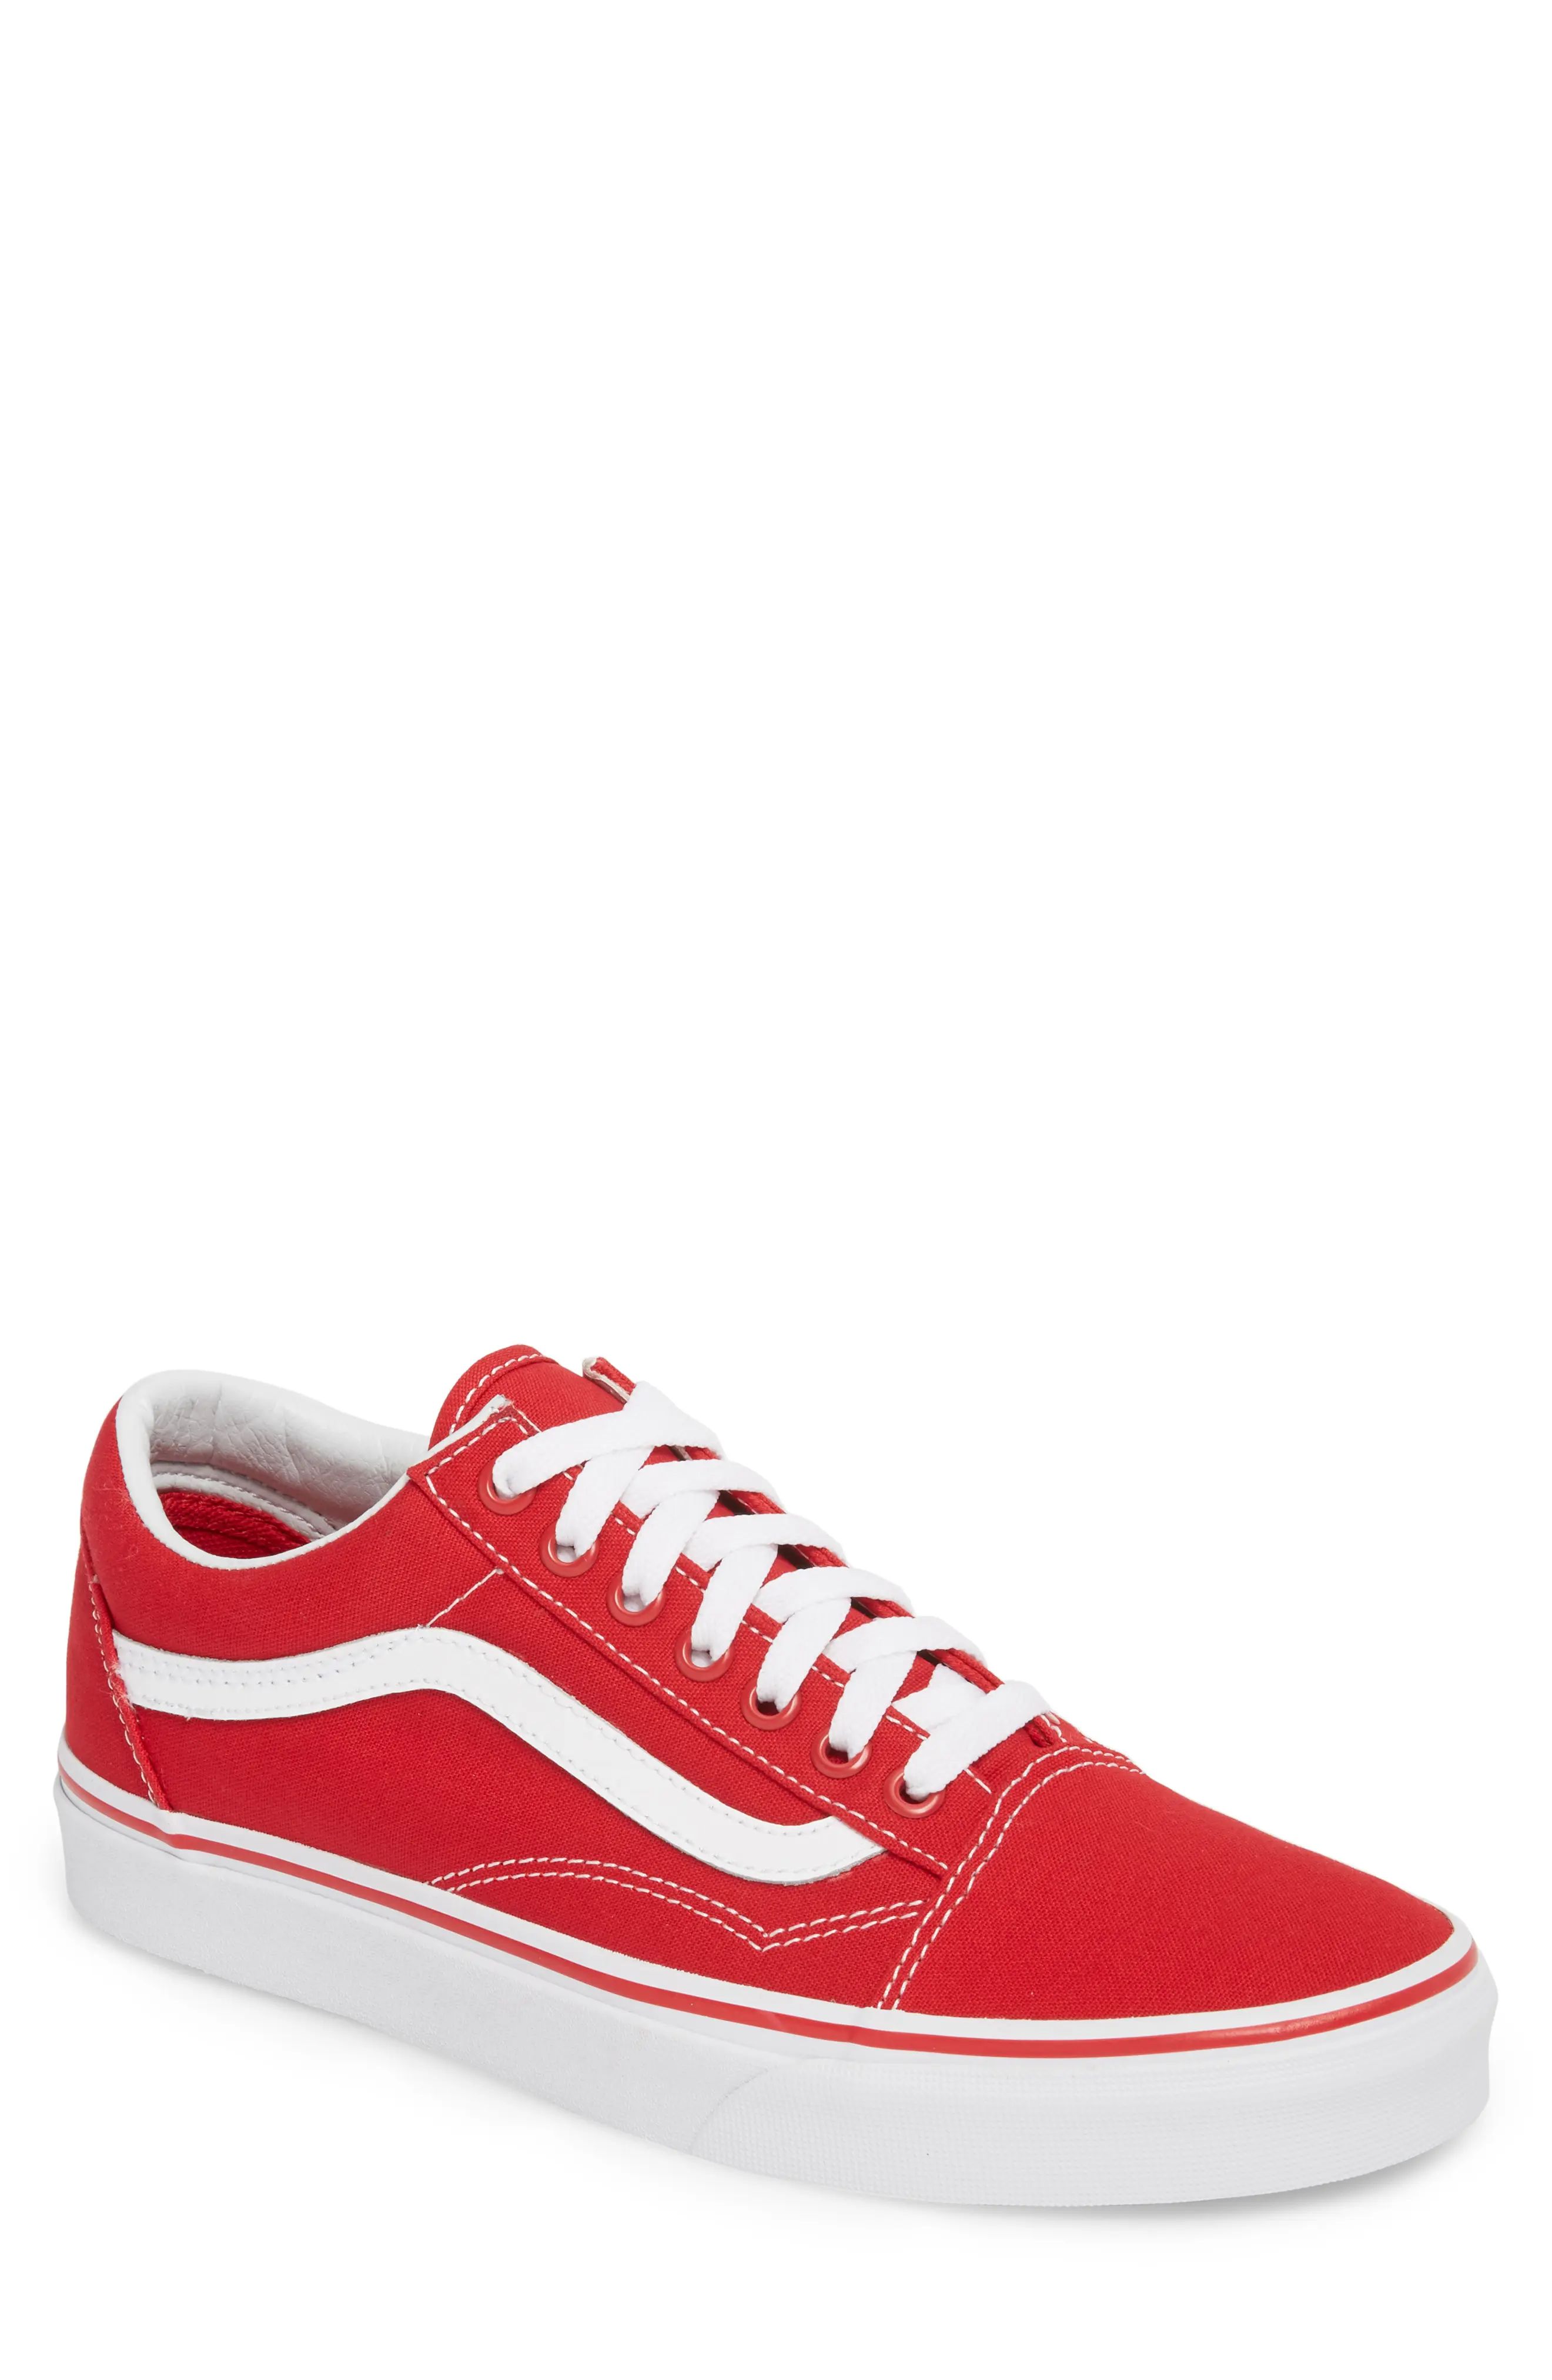 Men's Vans Old Skool Sneaker, Size 8.5 M - Red | Nordstrom